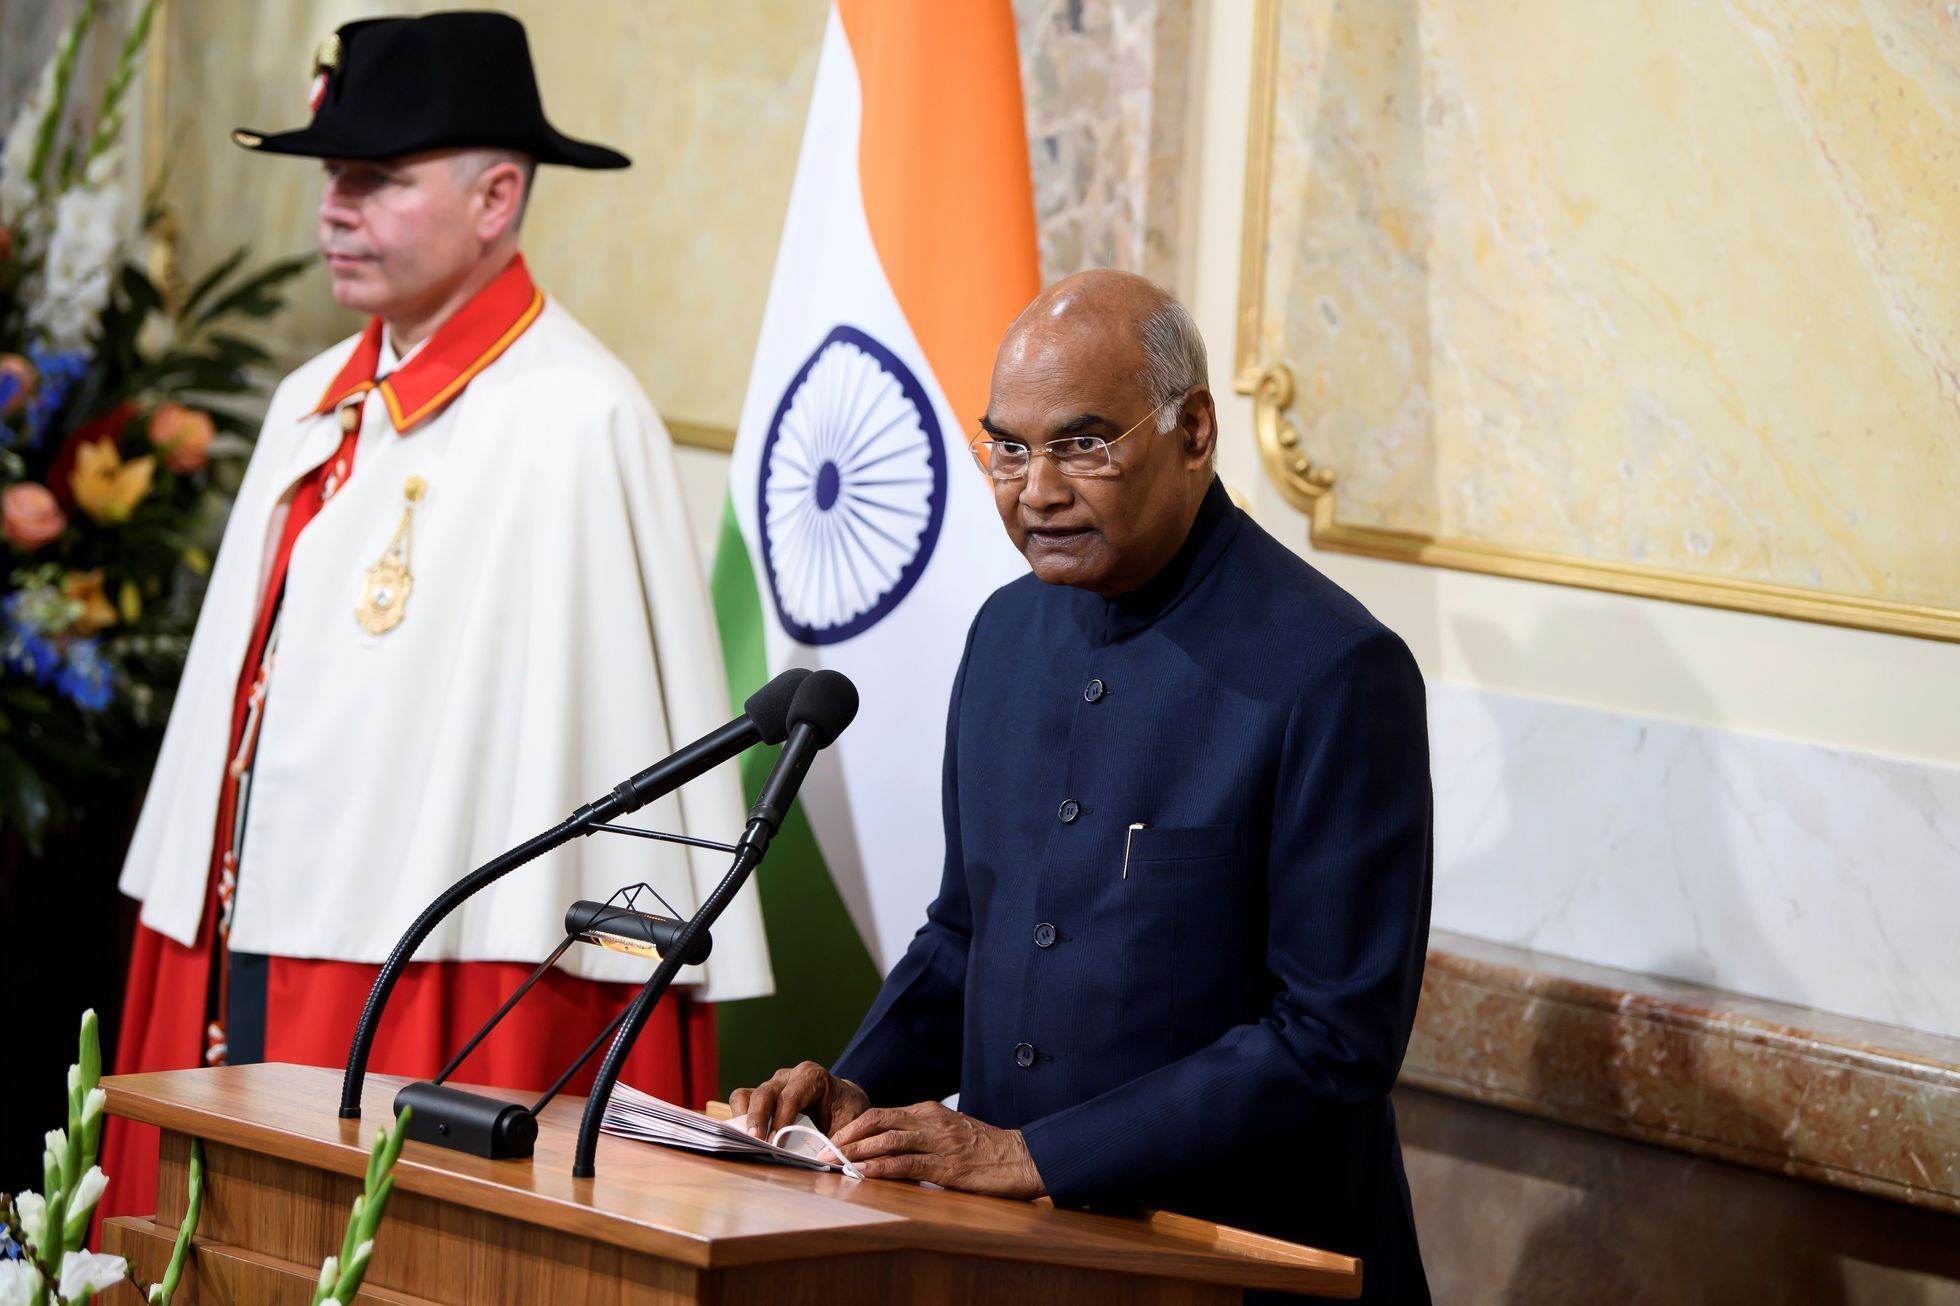 President of India Ram Nath Kovind speaks during his state visit to Switzerland, at the Muensterplatz in Bern